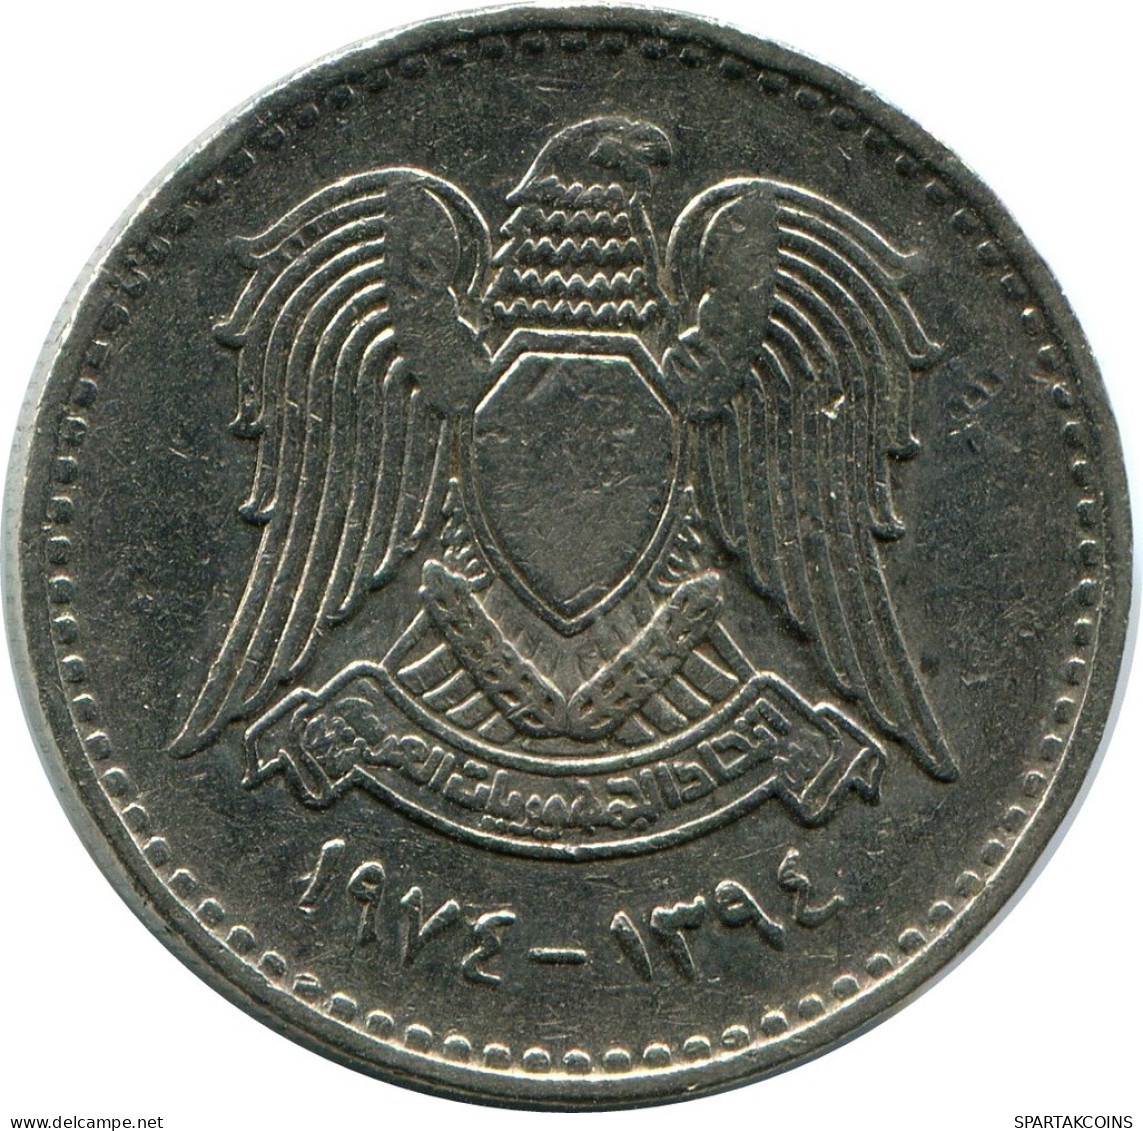 50 QIRSH 1974 SIRIA SYRIA Islámico Moneda #AZ219.E.A - Syria